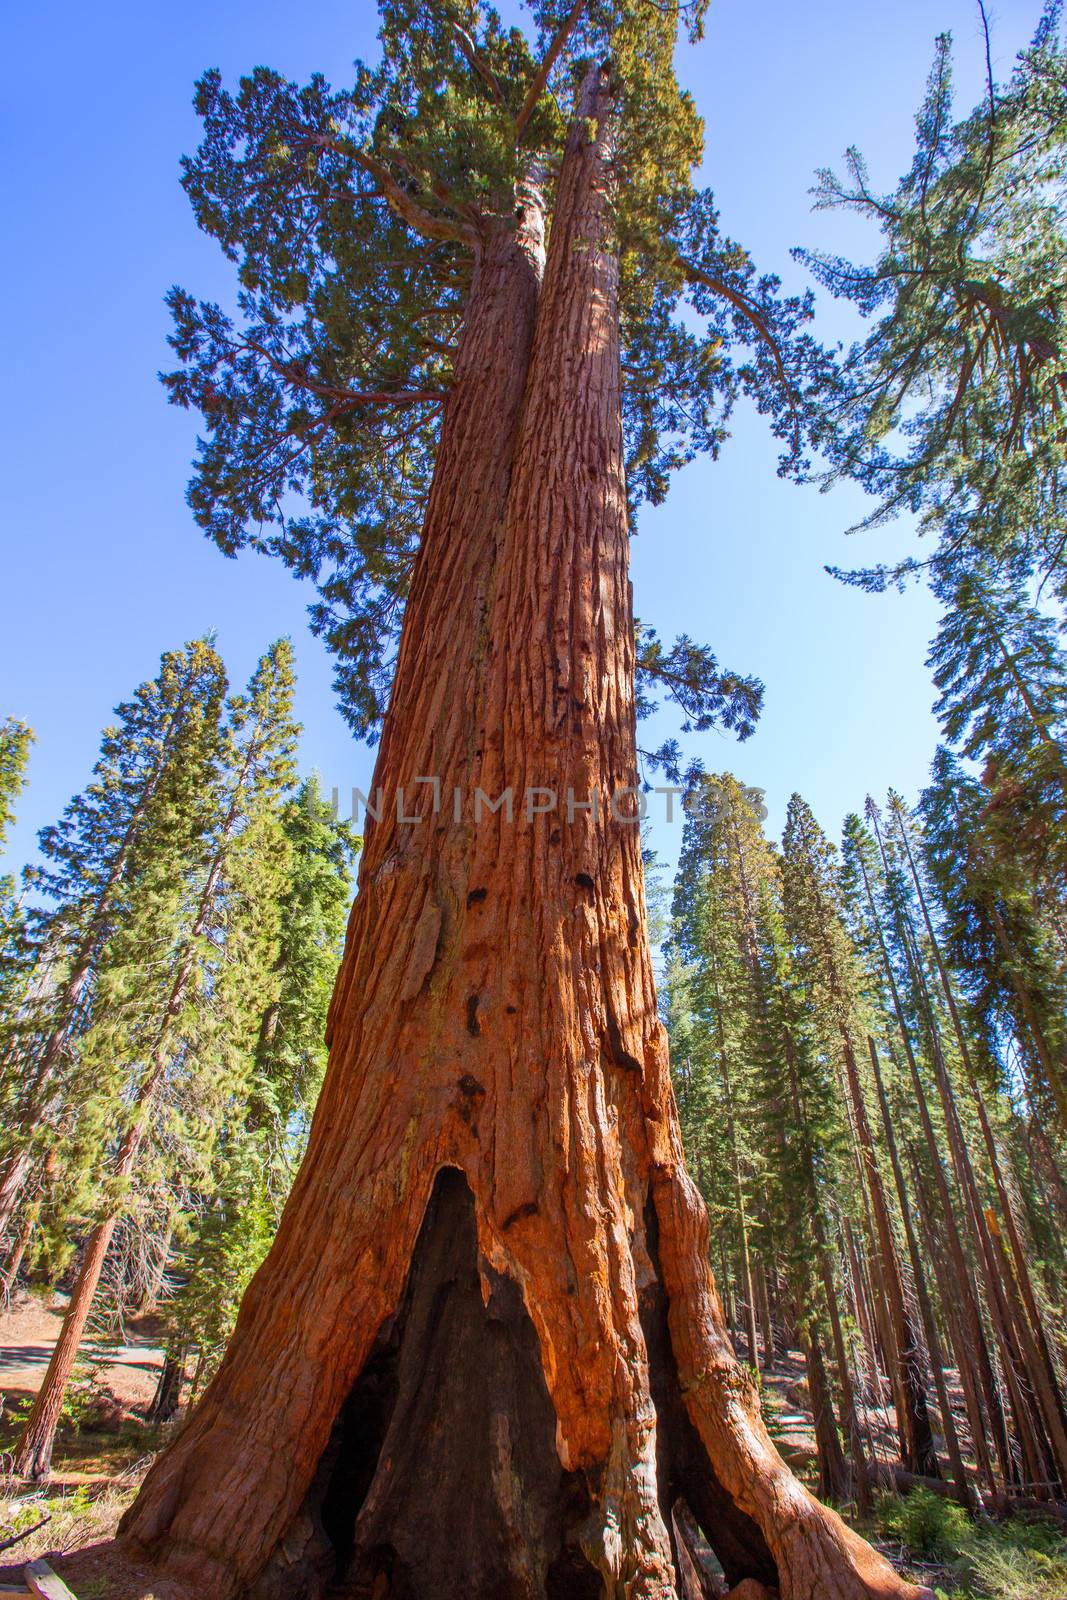 Sequoias in Mariposa grove at Yosemite National Park California